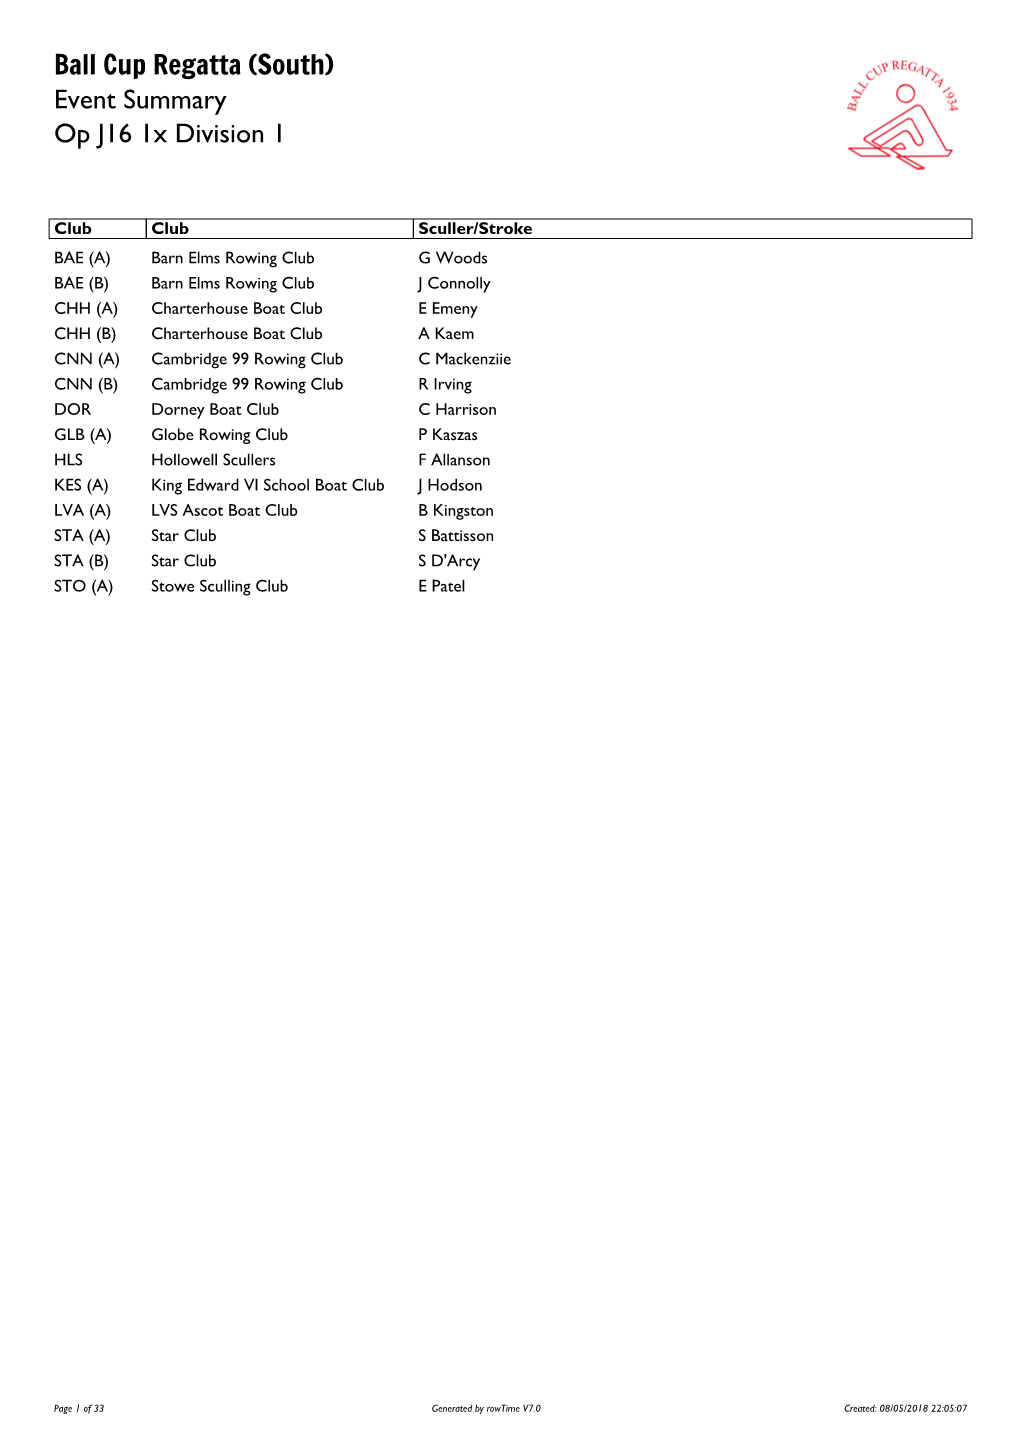 Ball Cup Regatta (South) Event Summary Op J16 1X Division 1